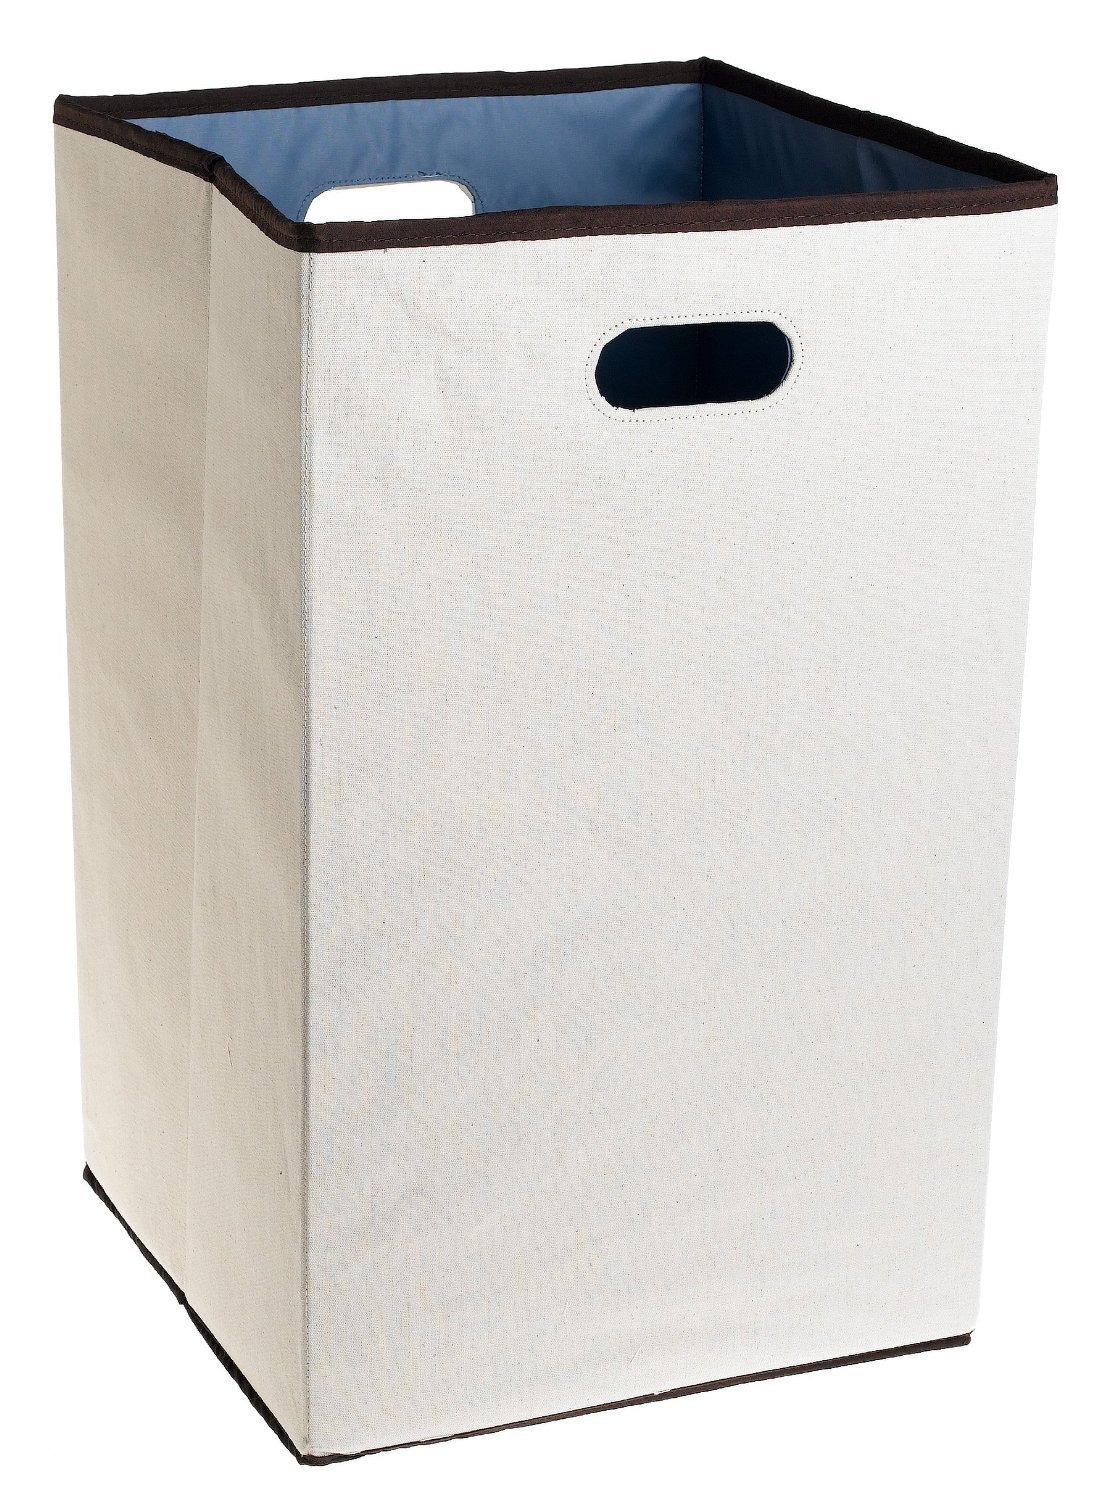 Rubbermaid Configurations Custom Closet Folding Laundry Hamper – Just $12.99!